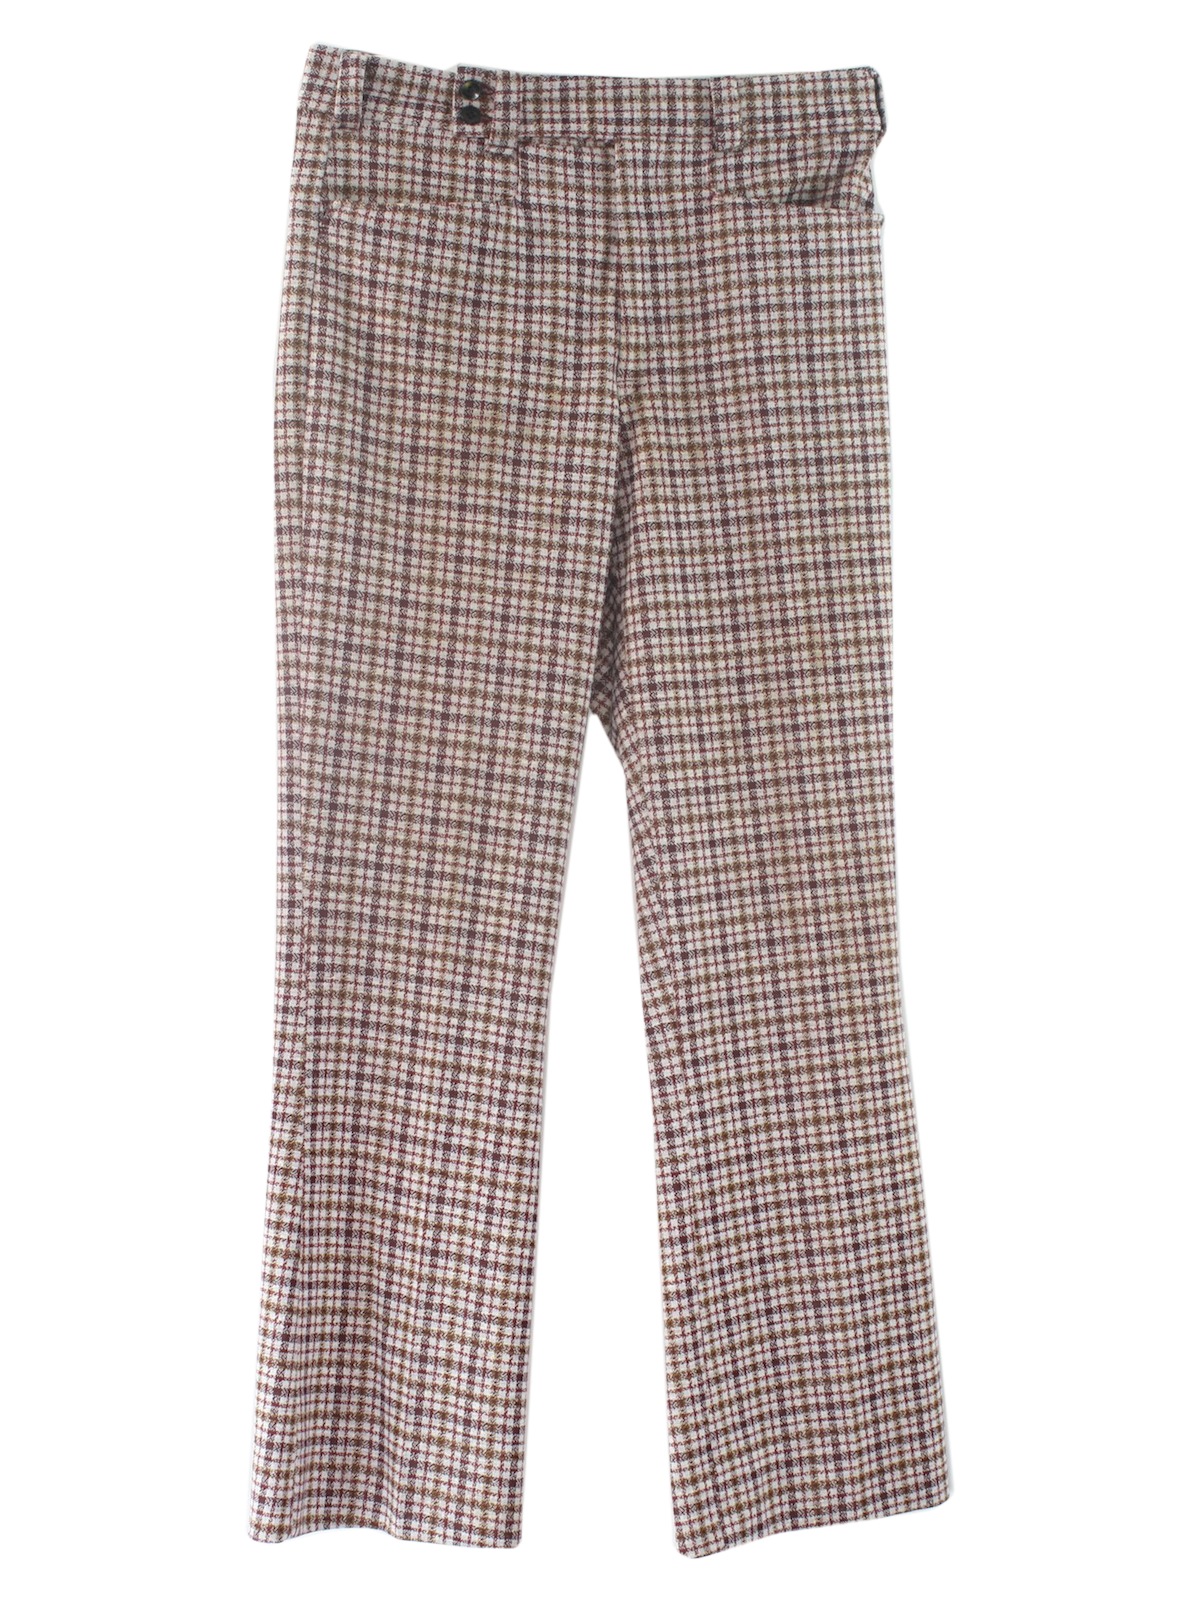 Seventies Vintage Flared Pants / Flares: 70s -Care- Mens maroon, rust ...